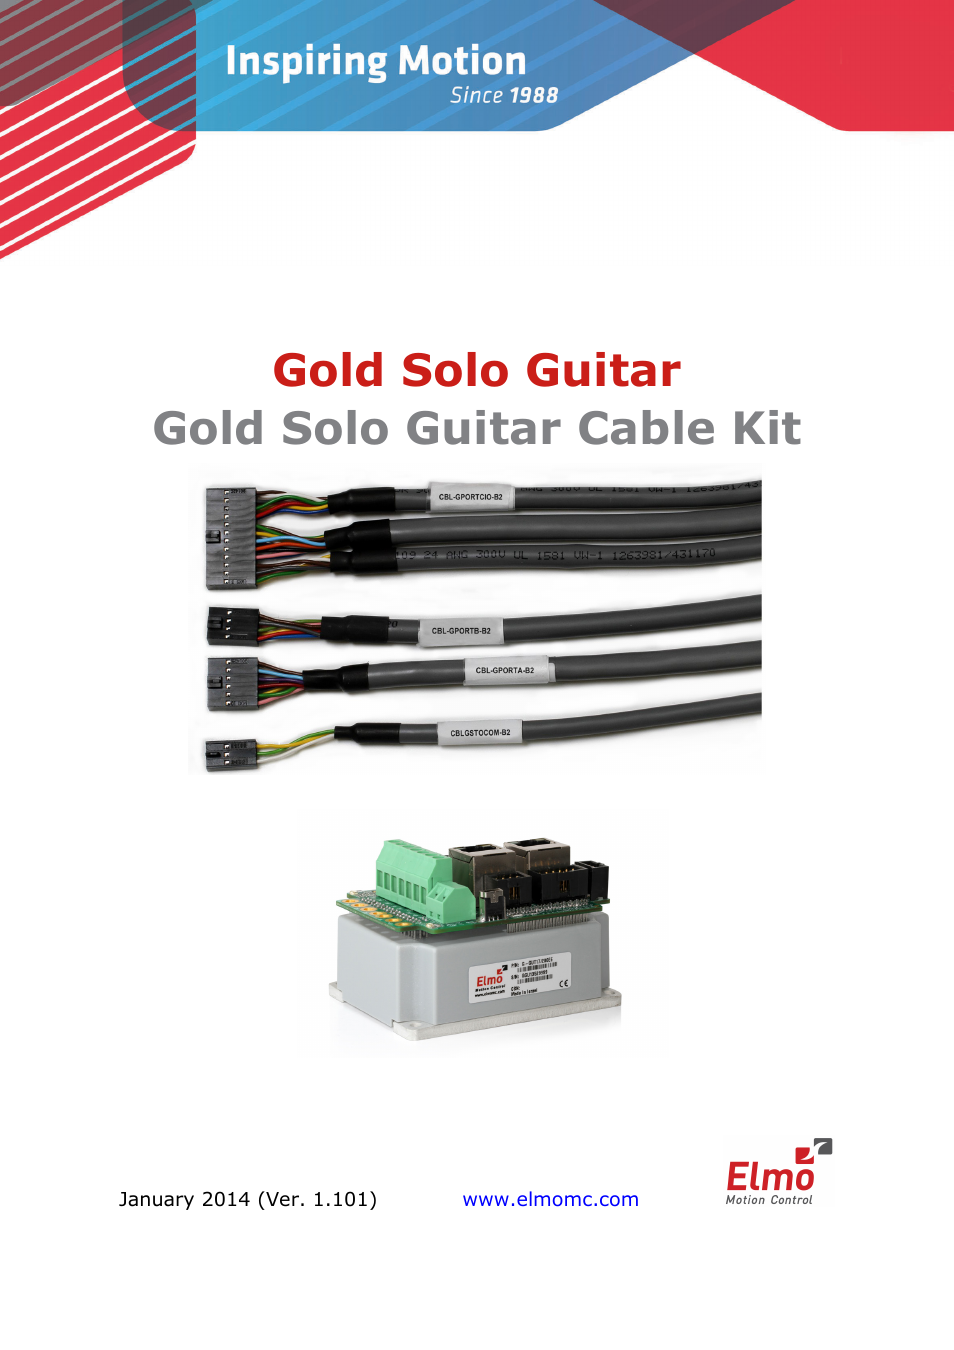 Gold Line Digital Servo Drives-Gold Solo Guitar Cable Kit